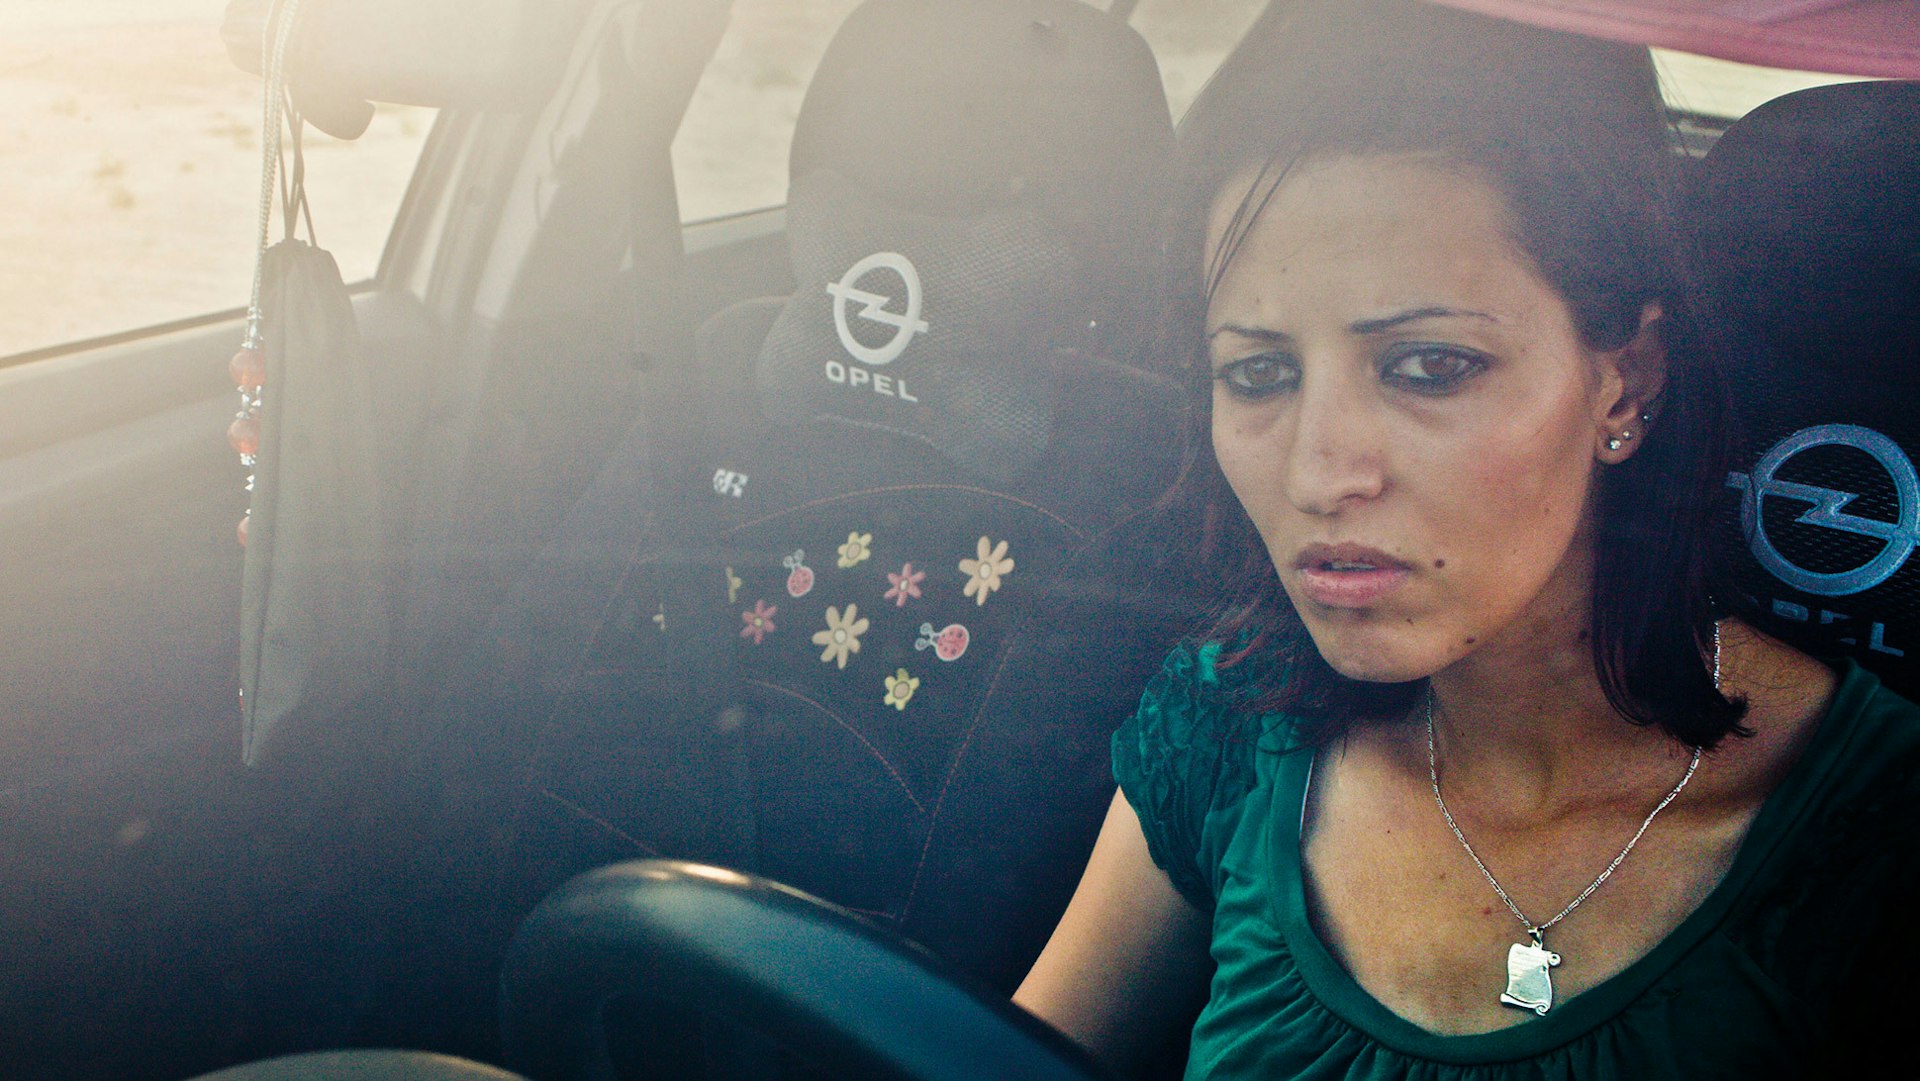 The street racing Palestinian women refusing to slow down